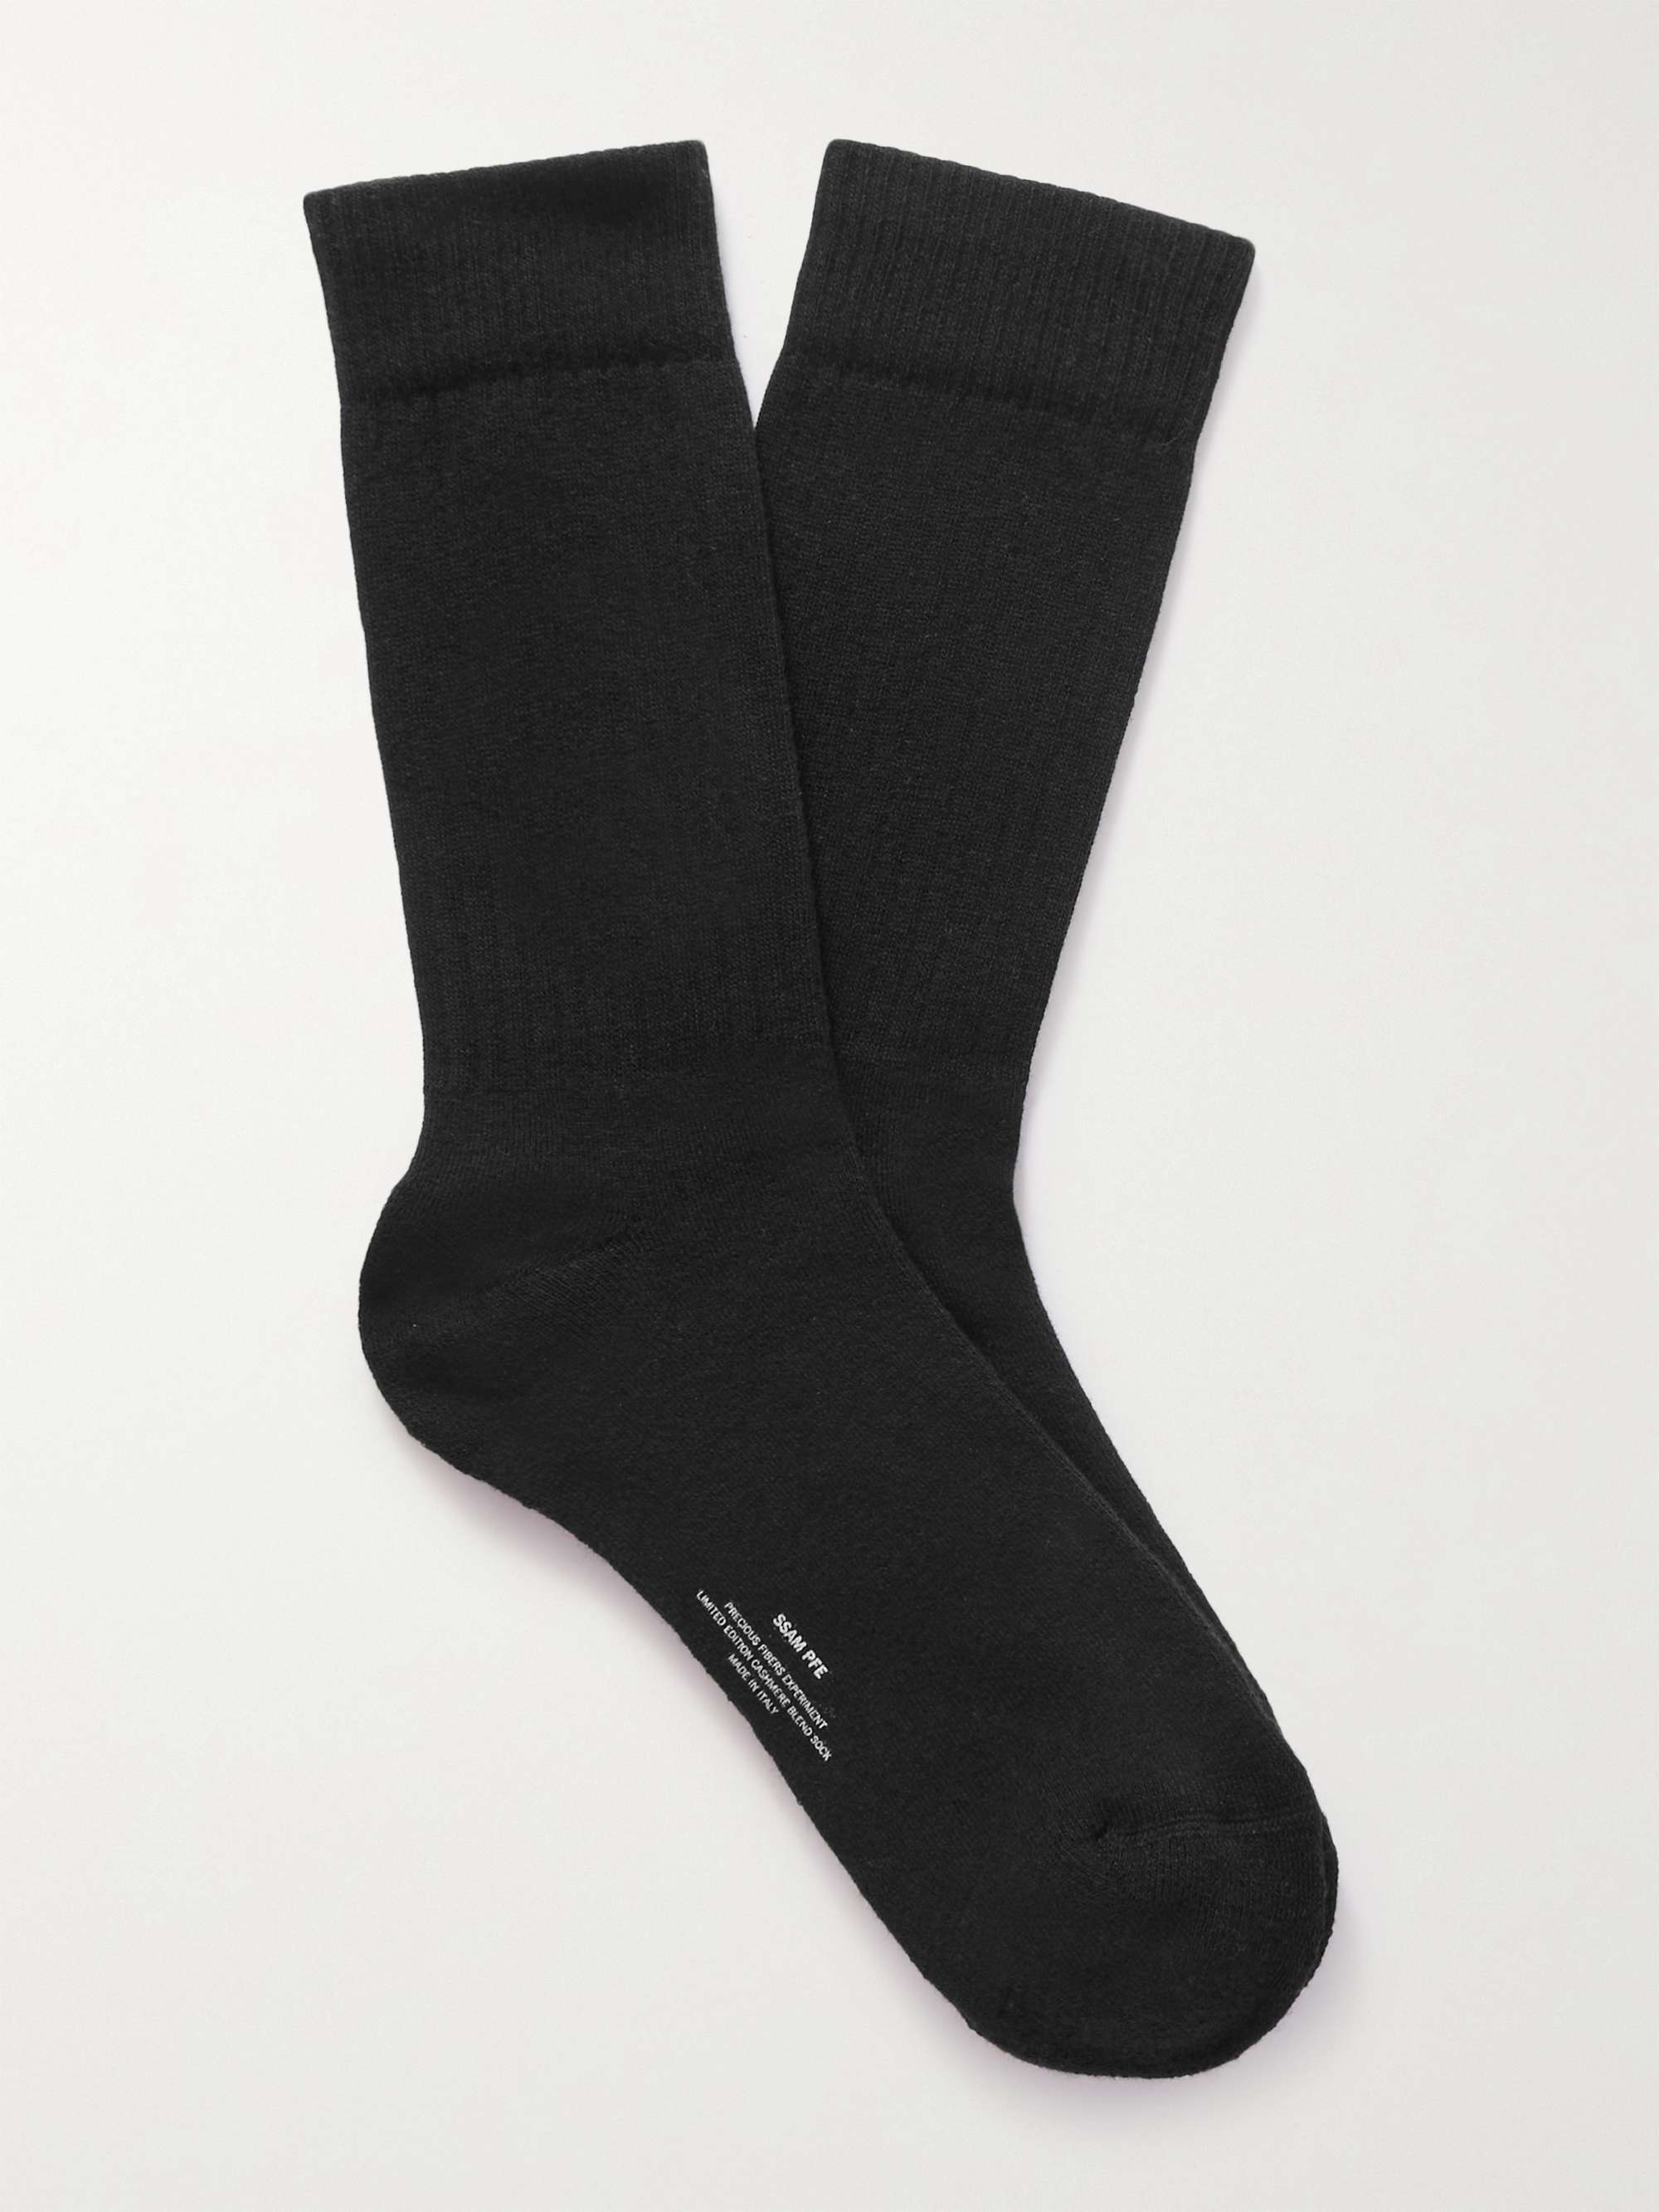 SSAM Cory Ribbed Cotton-Blend Socks